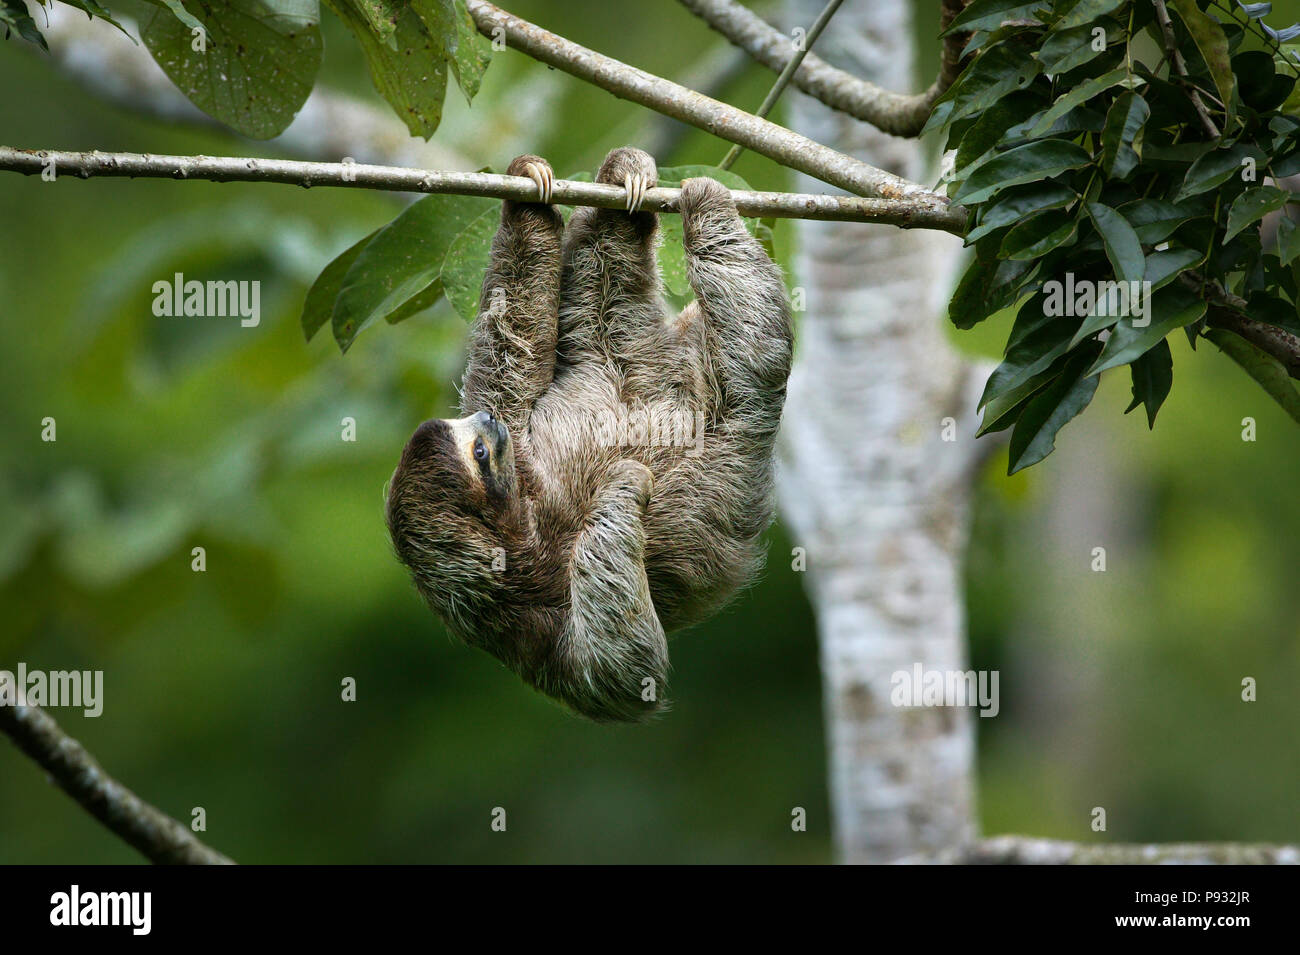 Die Tierwelt Panamas mit einem dreizehigen Faultier, Bradypus variegatus, im 265 Hektar großen Regenwald Metropolitan Park, Panama City, Republik Panama. Stockfoto